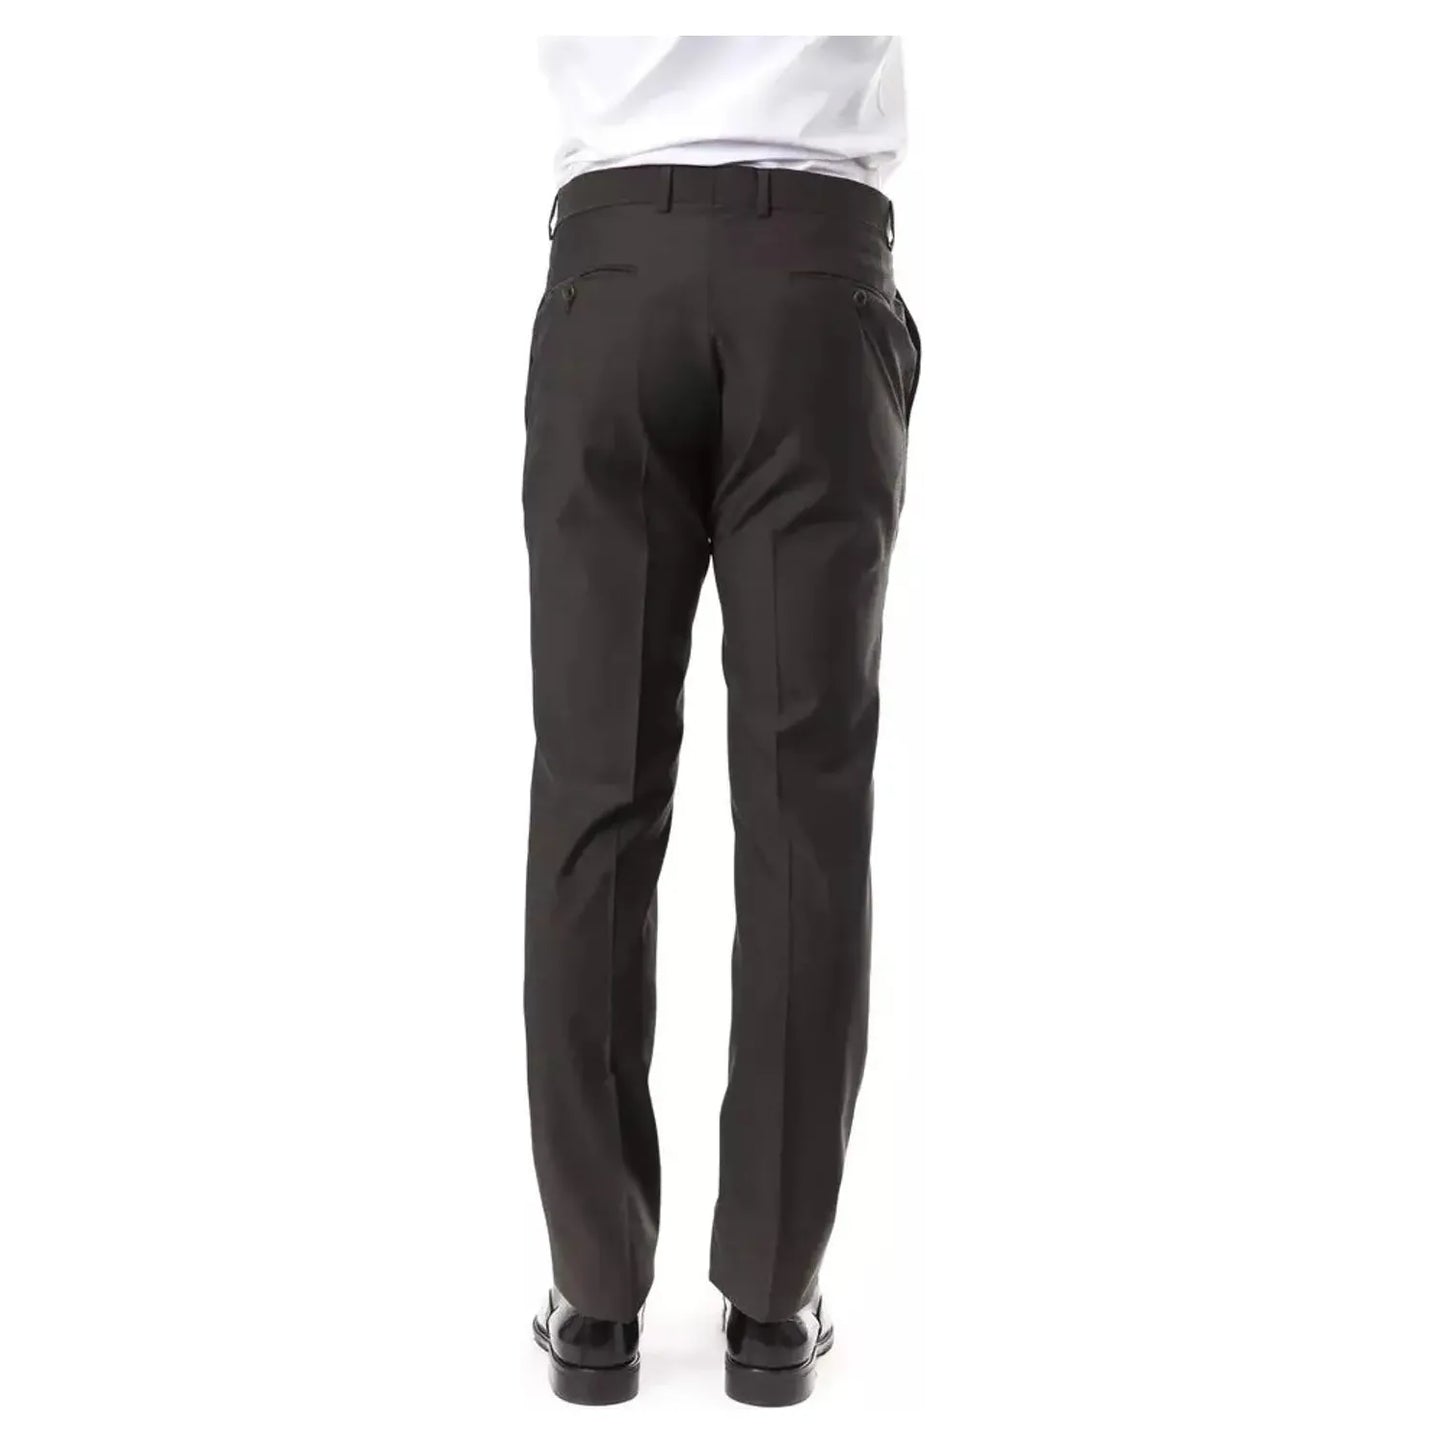 Uominitaliani Elegant Gray Woolen Suit Pants - Drop 7 gray-wool-jeans-pant-1 stock_product_image_17032_1505357184-15-55c74052-7a0.webp